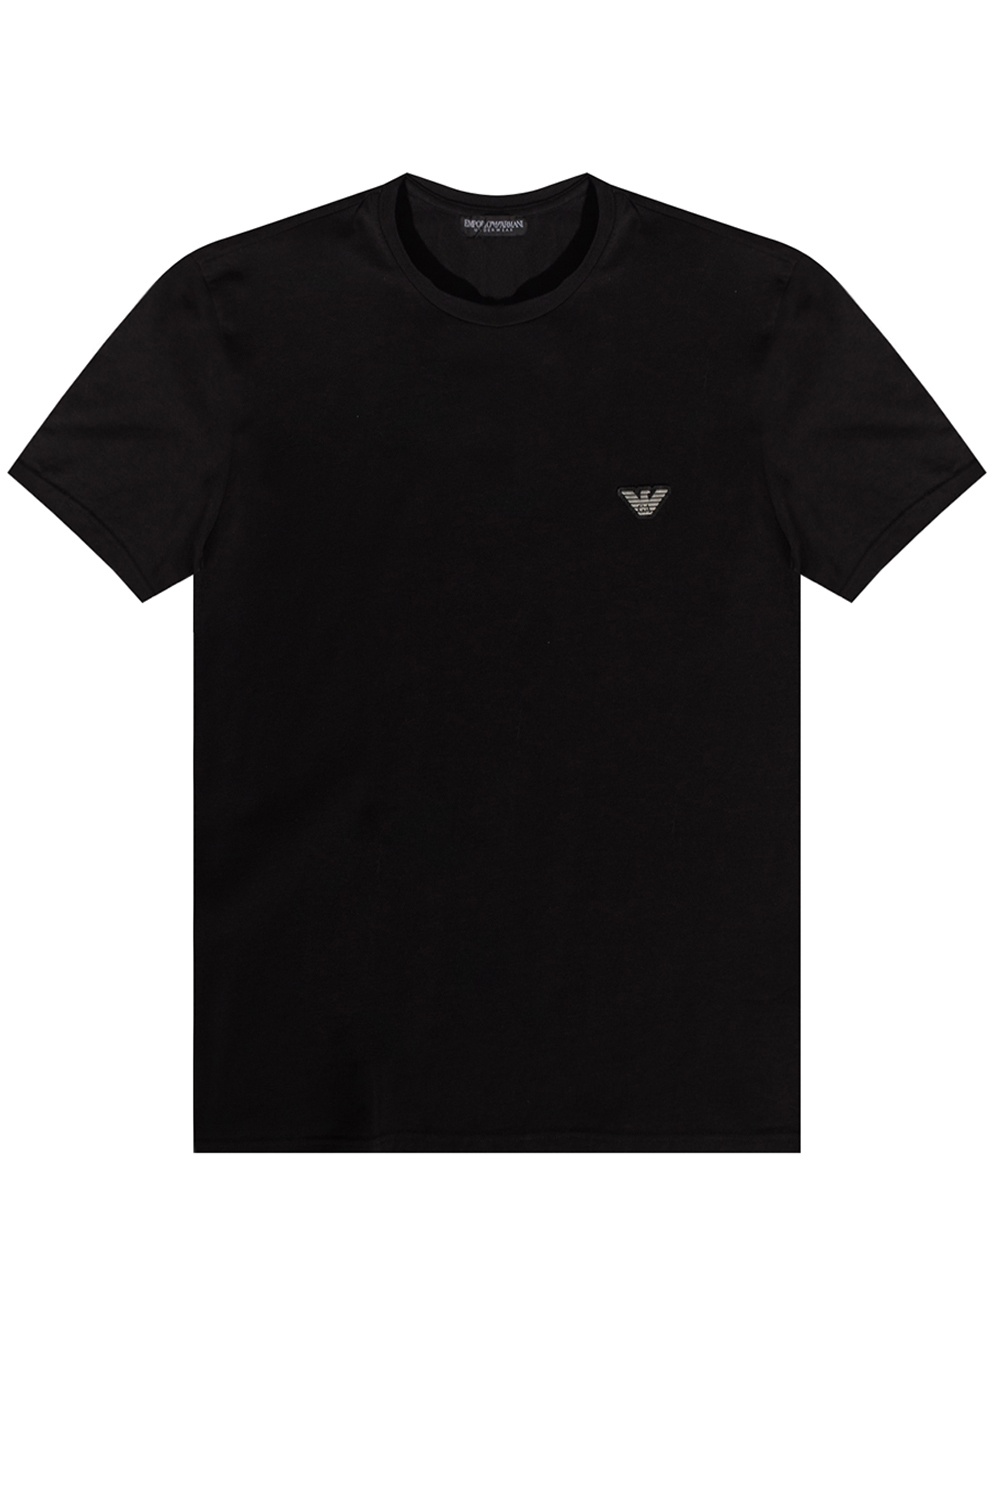 shirt - Men's - | Armani Jeans Bottes B55K1-51 | Armani Logo T